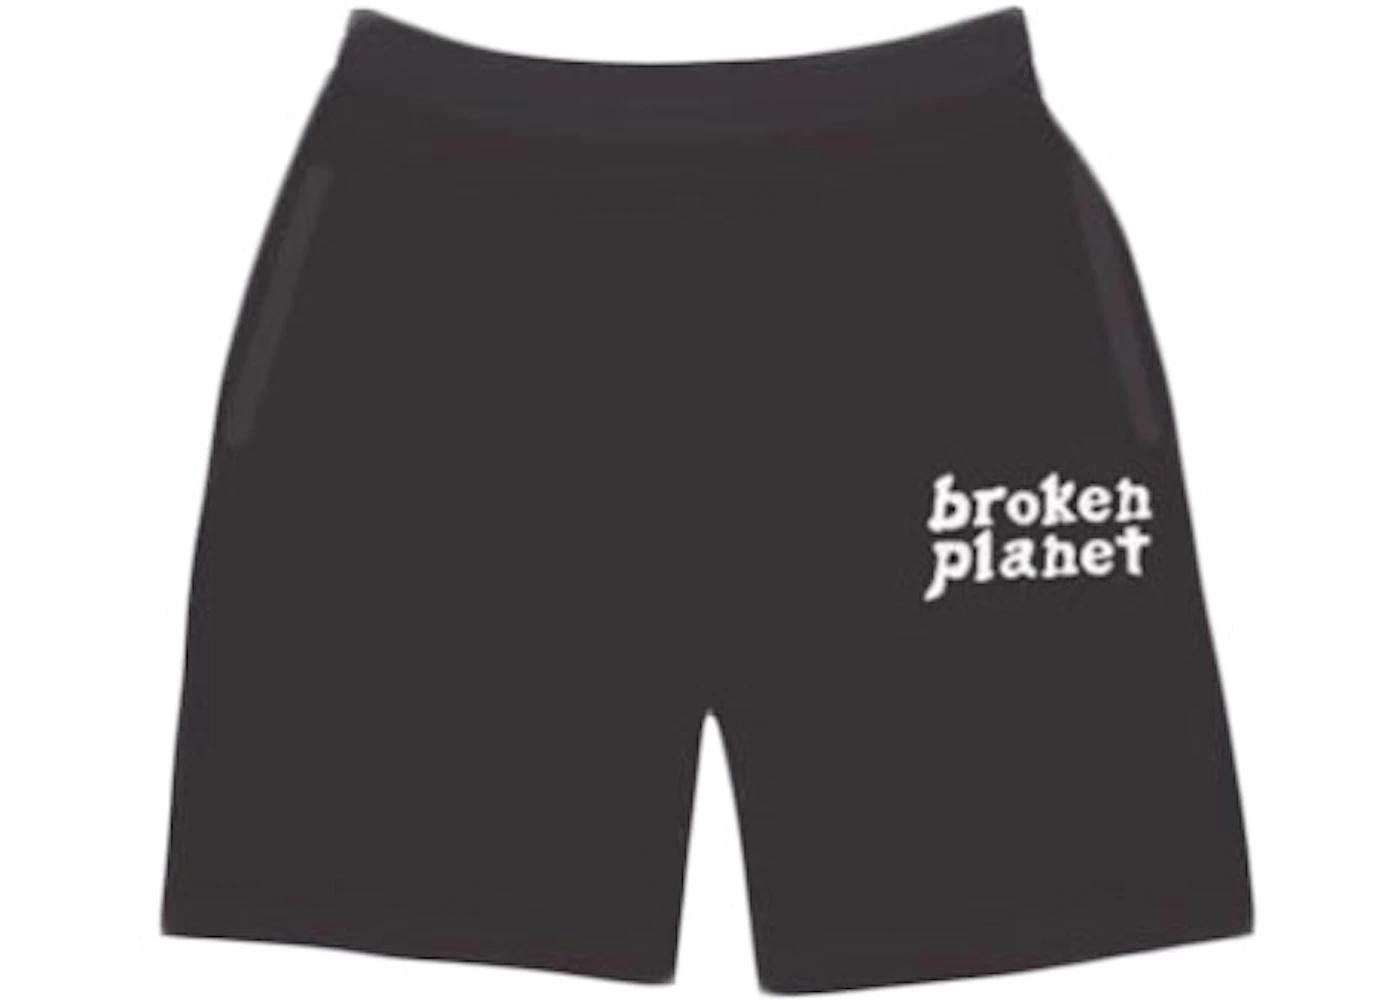 Basics Shorts Black by BROKEN PLANET MARKET